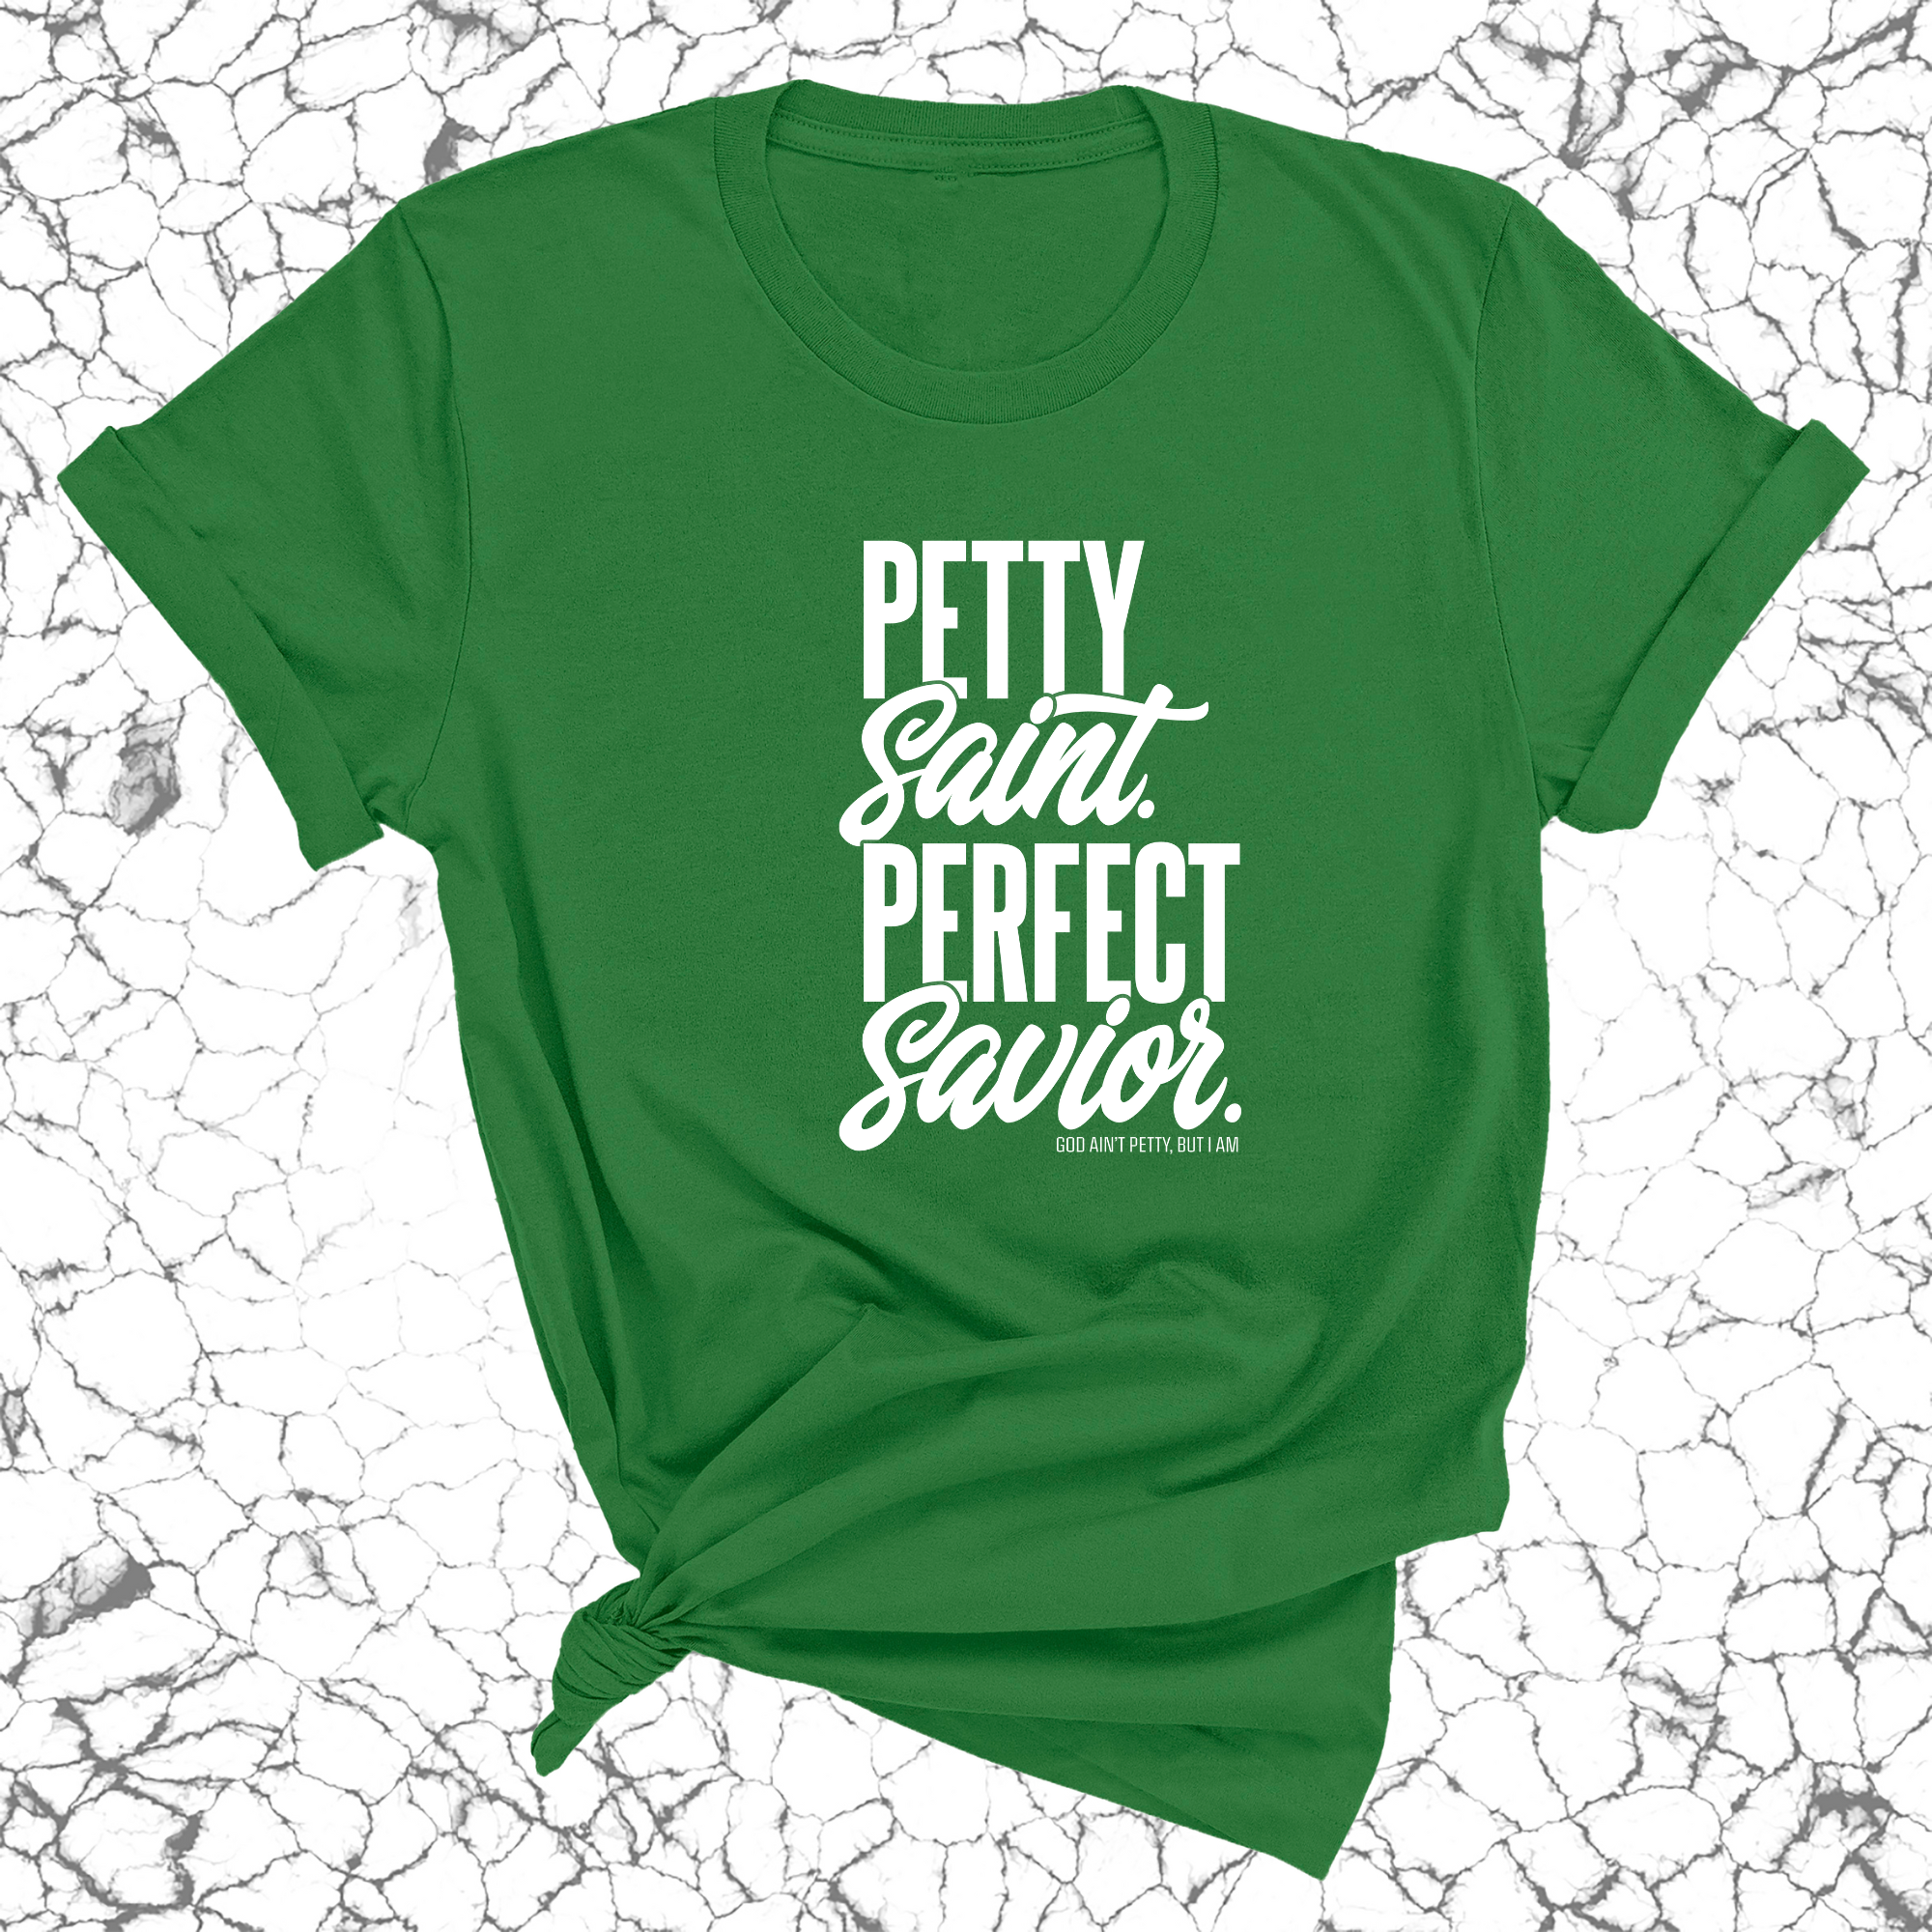 Petty Saint Perfect Savior Unisex Tee-T-Shirt-The Original God Ain't Petty But I Am